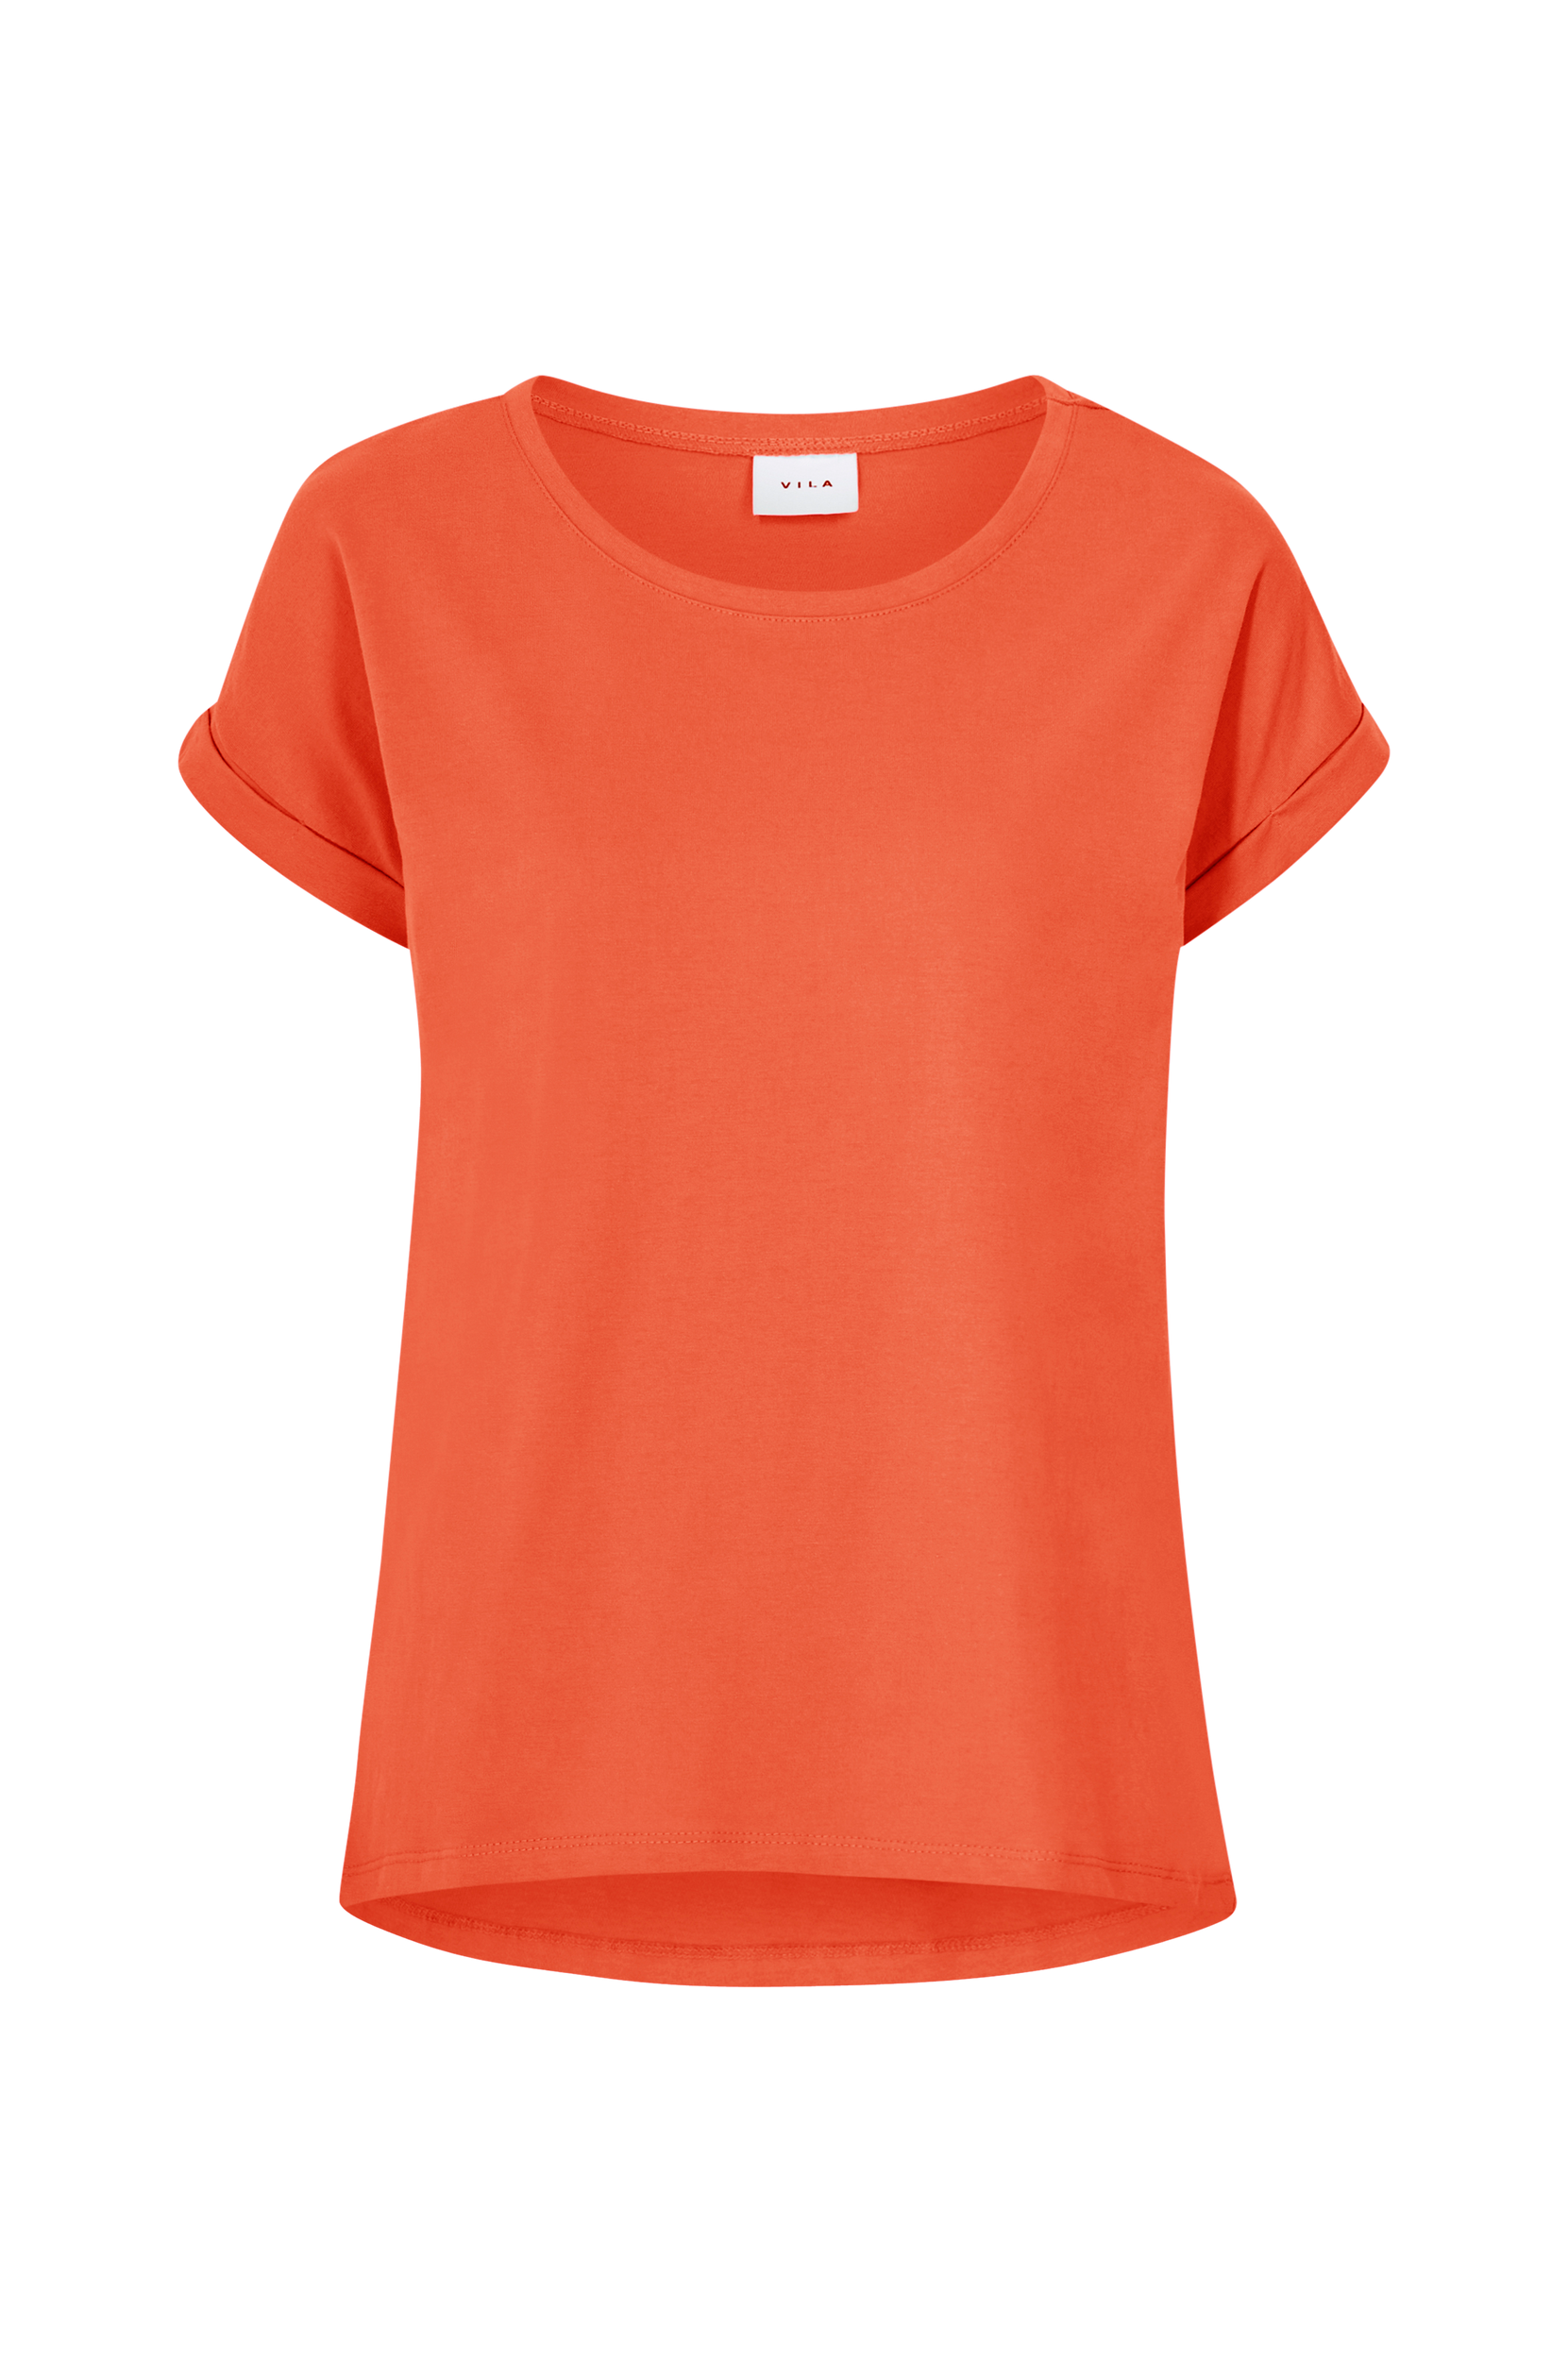 Vila - Top viDreamers New Pure T-shirt - Orange - 38